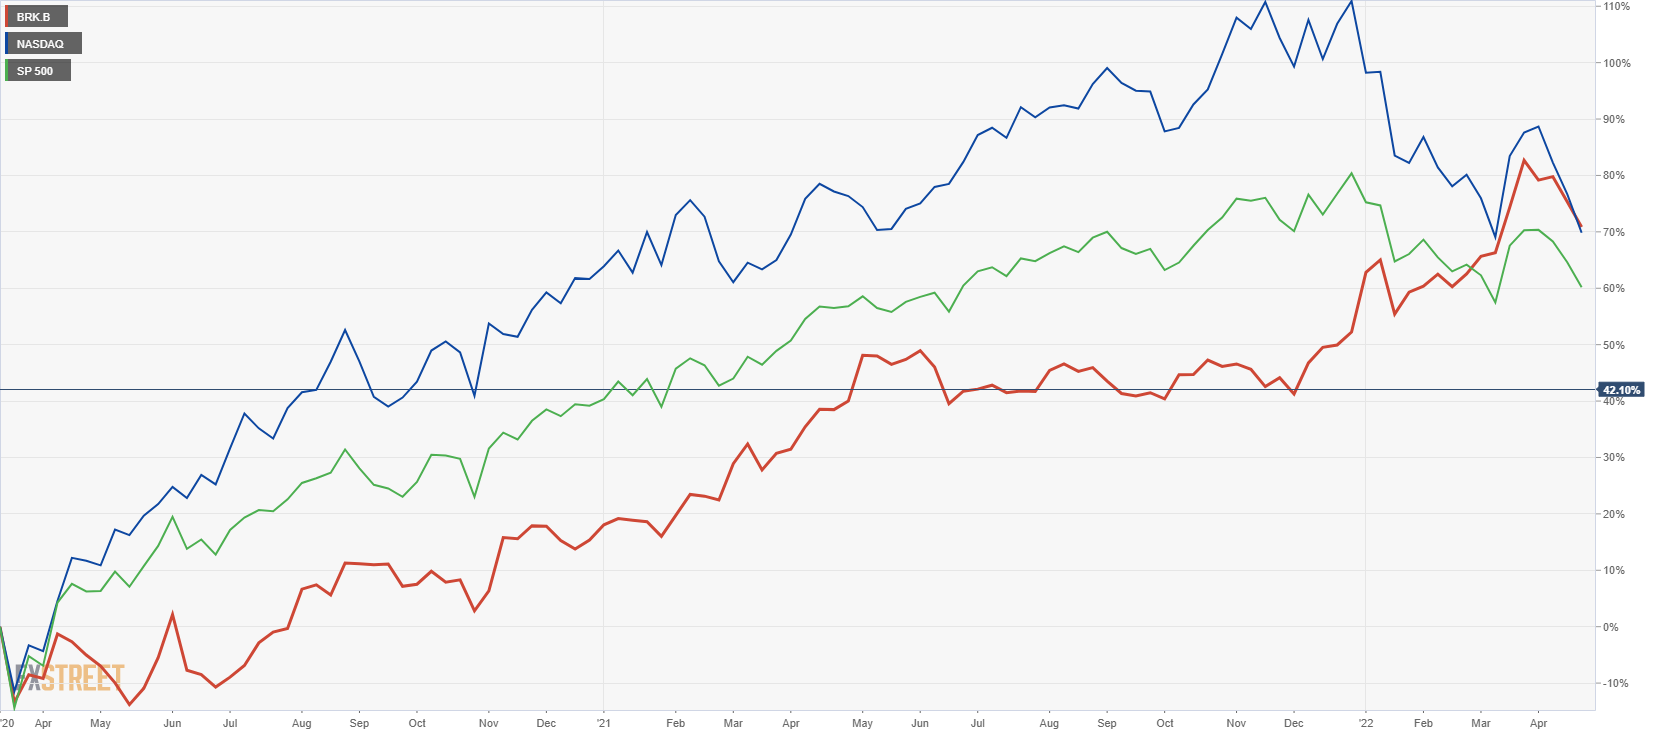 BRK.B performance vs NASDAQ and S&P 500 since covid pandemic